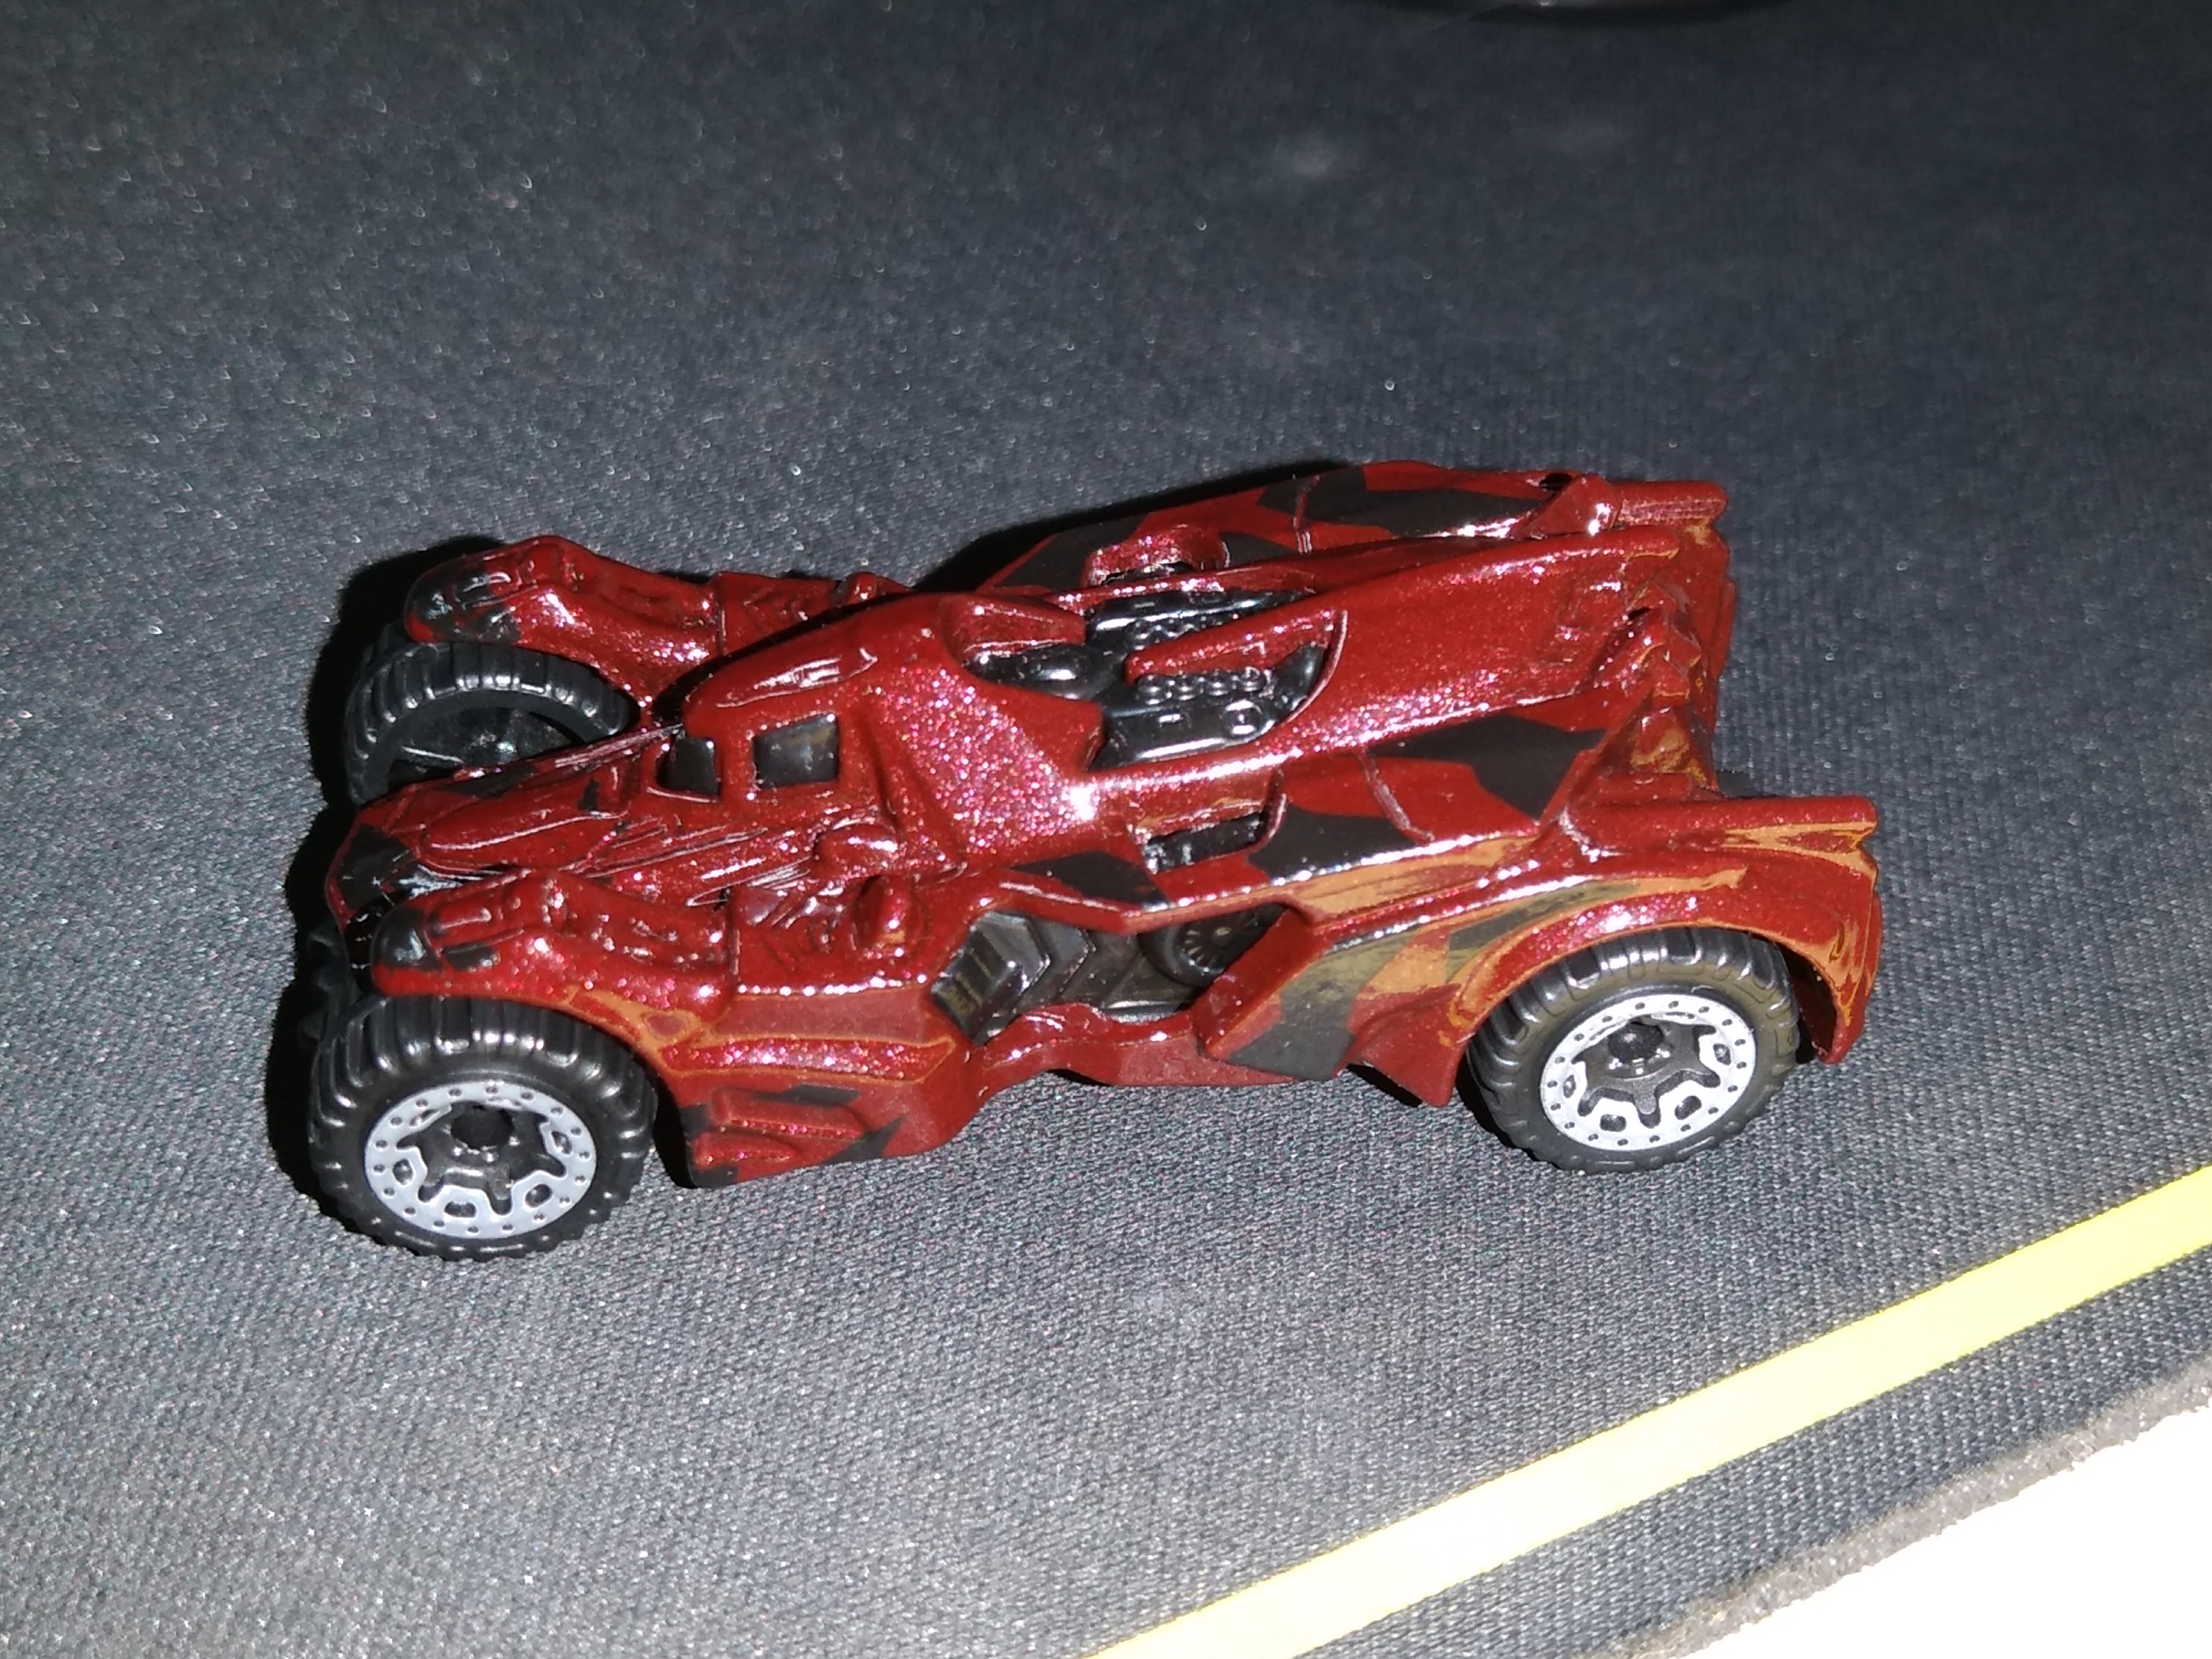 Mattel Hot Wheels DC Batman - Batman: Arkham Knight Batmobile Vehicle  (HLK67)